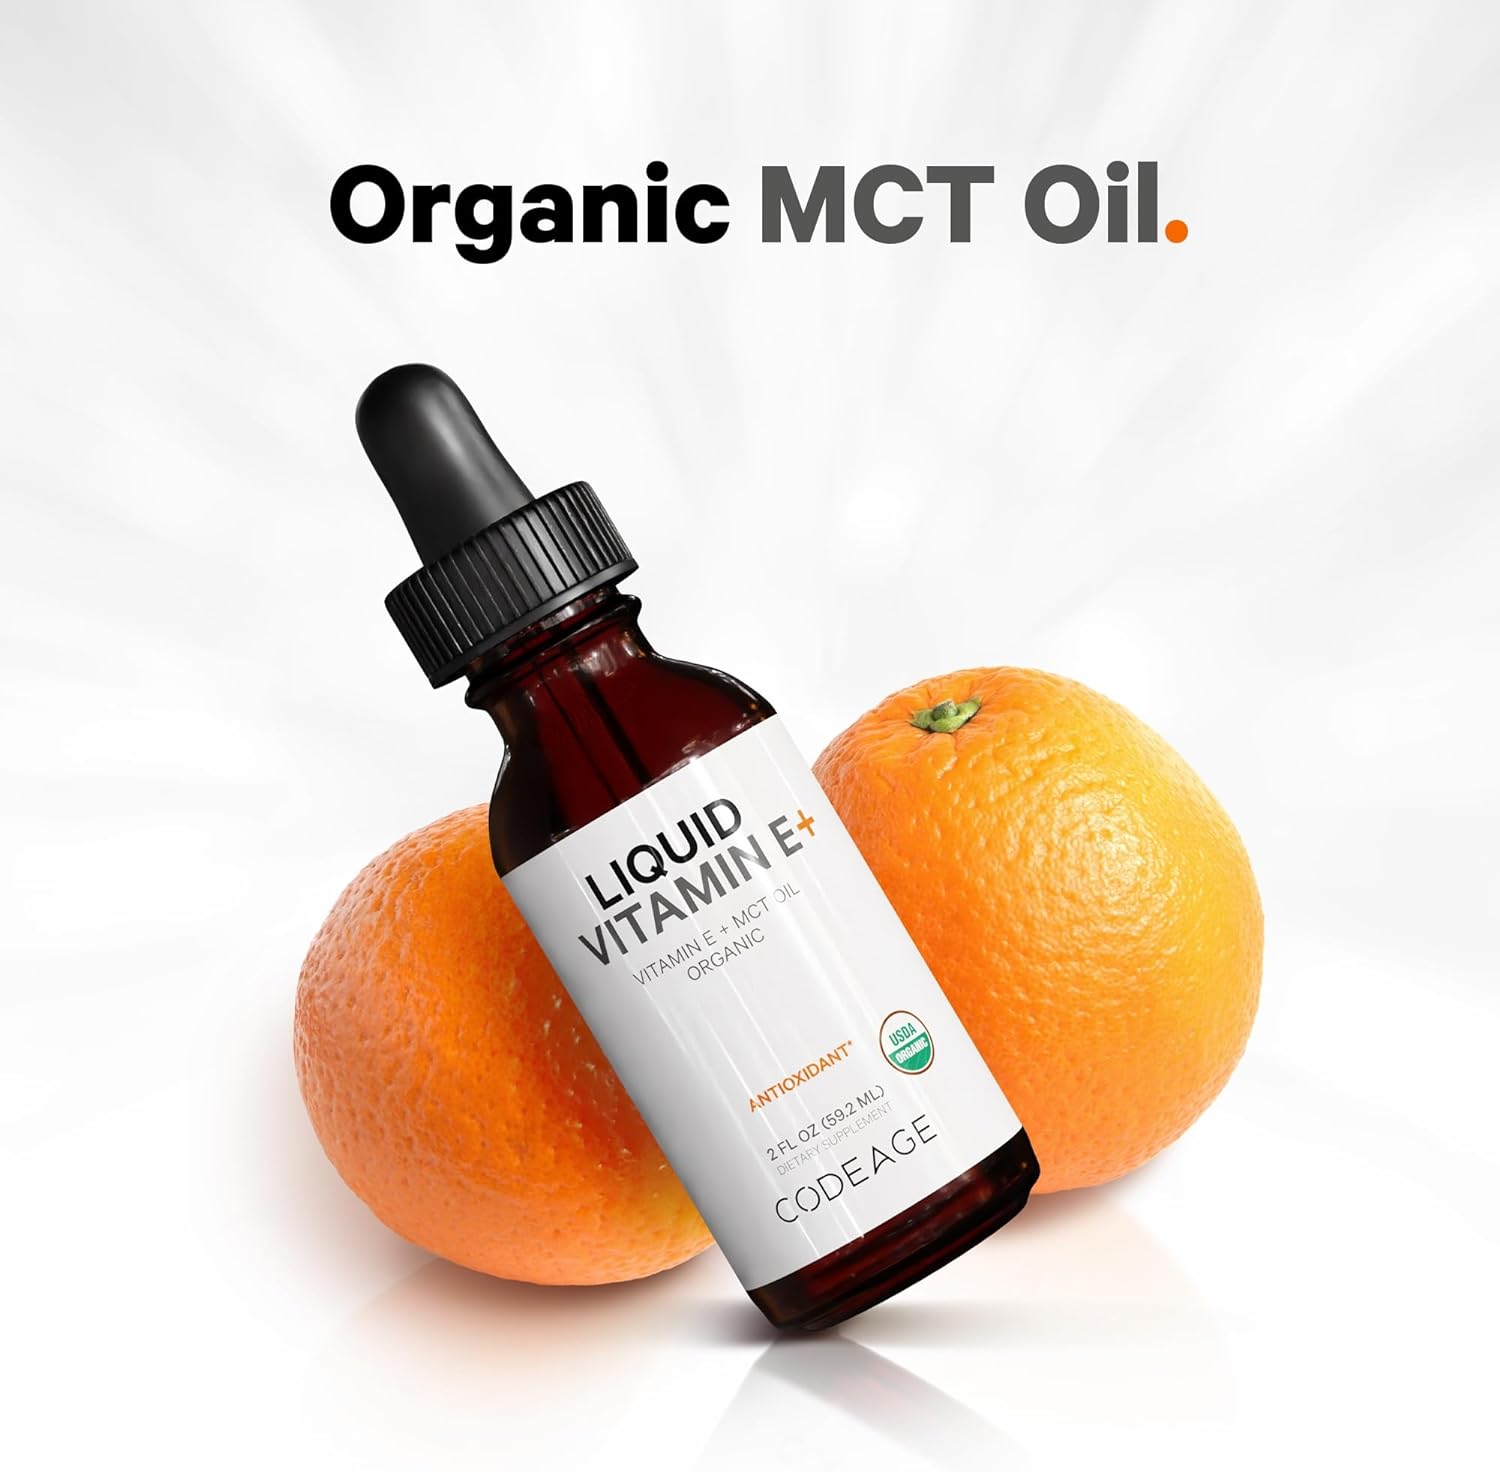 Codeage Liquid Vitamin E+ - USDA-Certified Organic, Organic MCT Oil, Organic Orange Oil Fruit, 2-Month Supply, Unflavored - Antioxidant, Skin & Immune Support - Non-GMO, Vegan, Gluten-Free - 2 fl oz : Health & Household